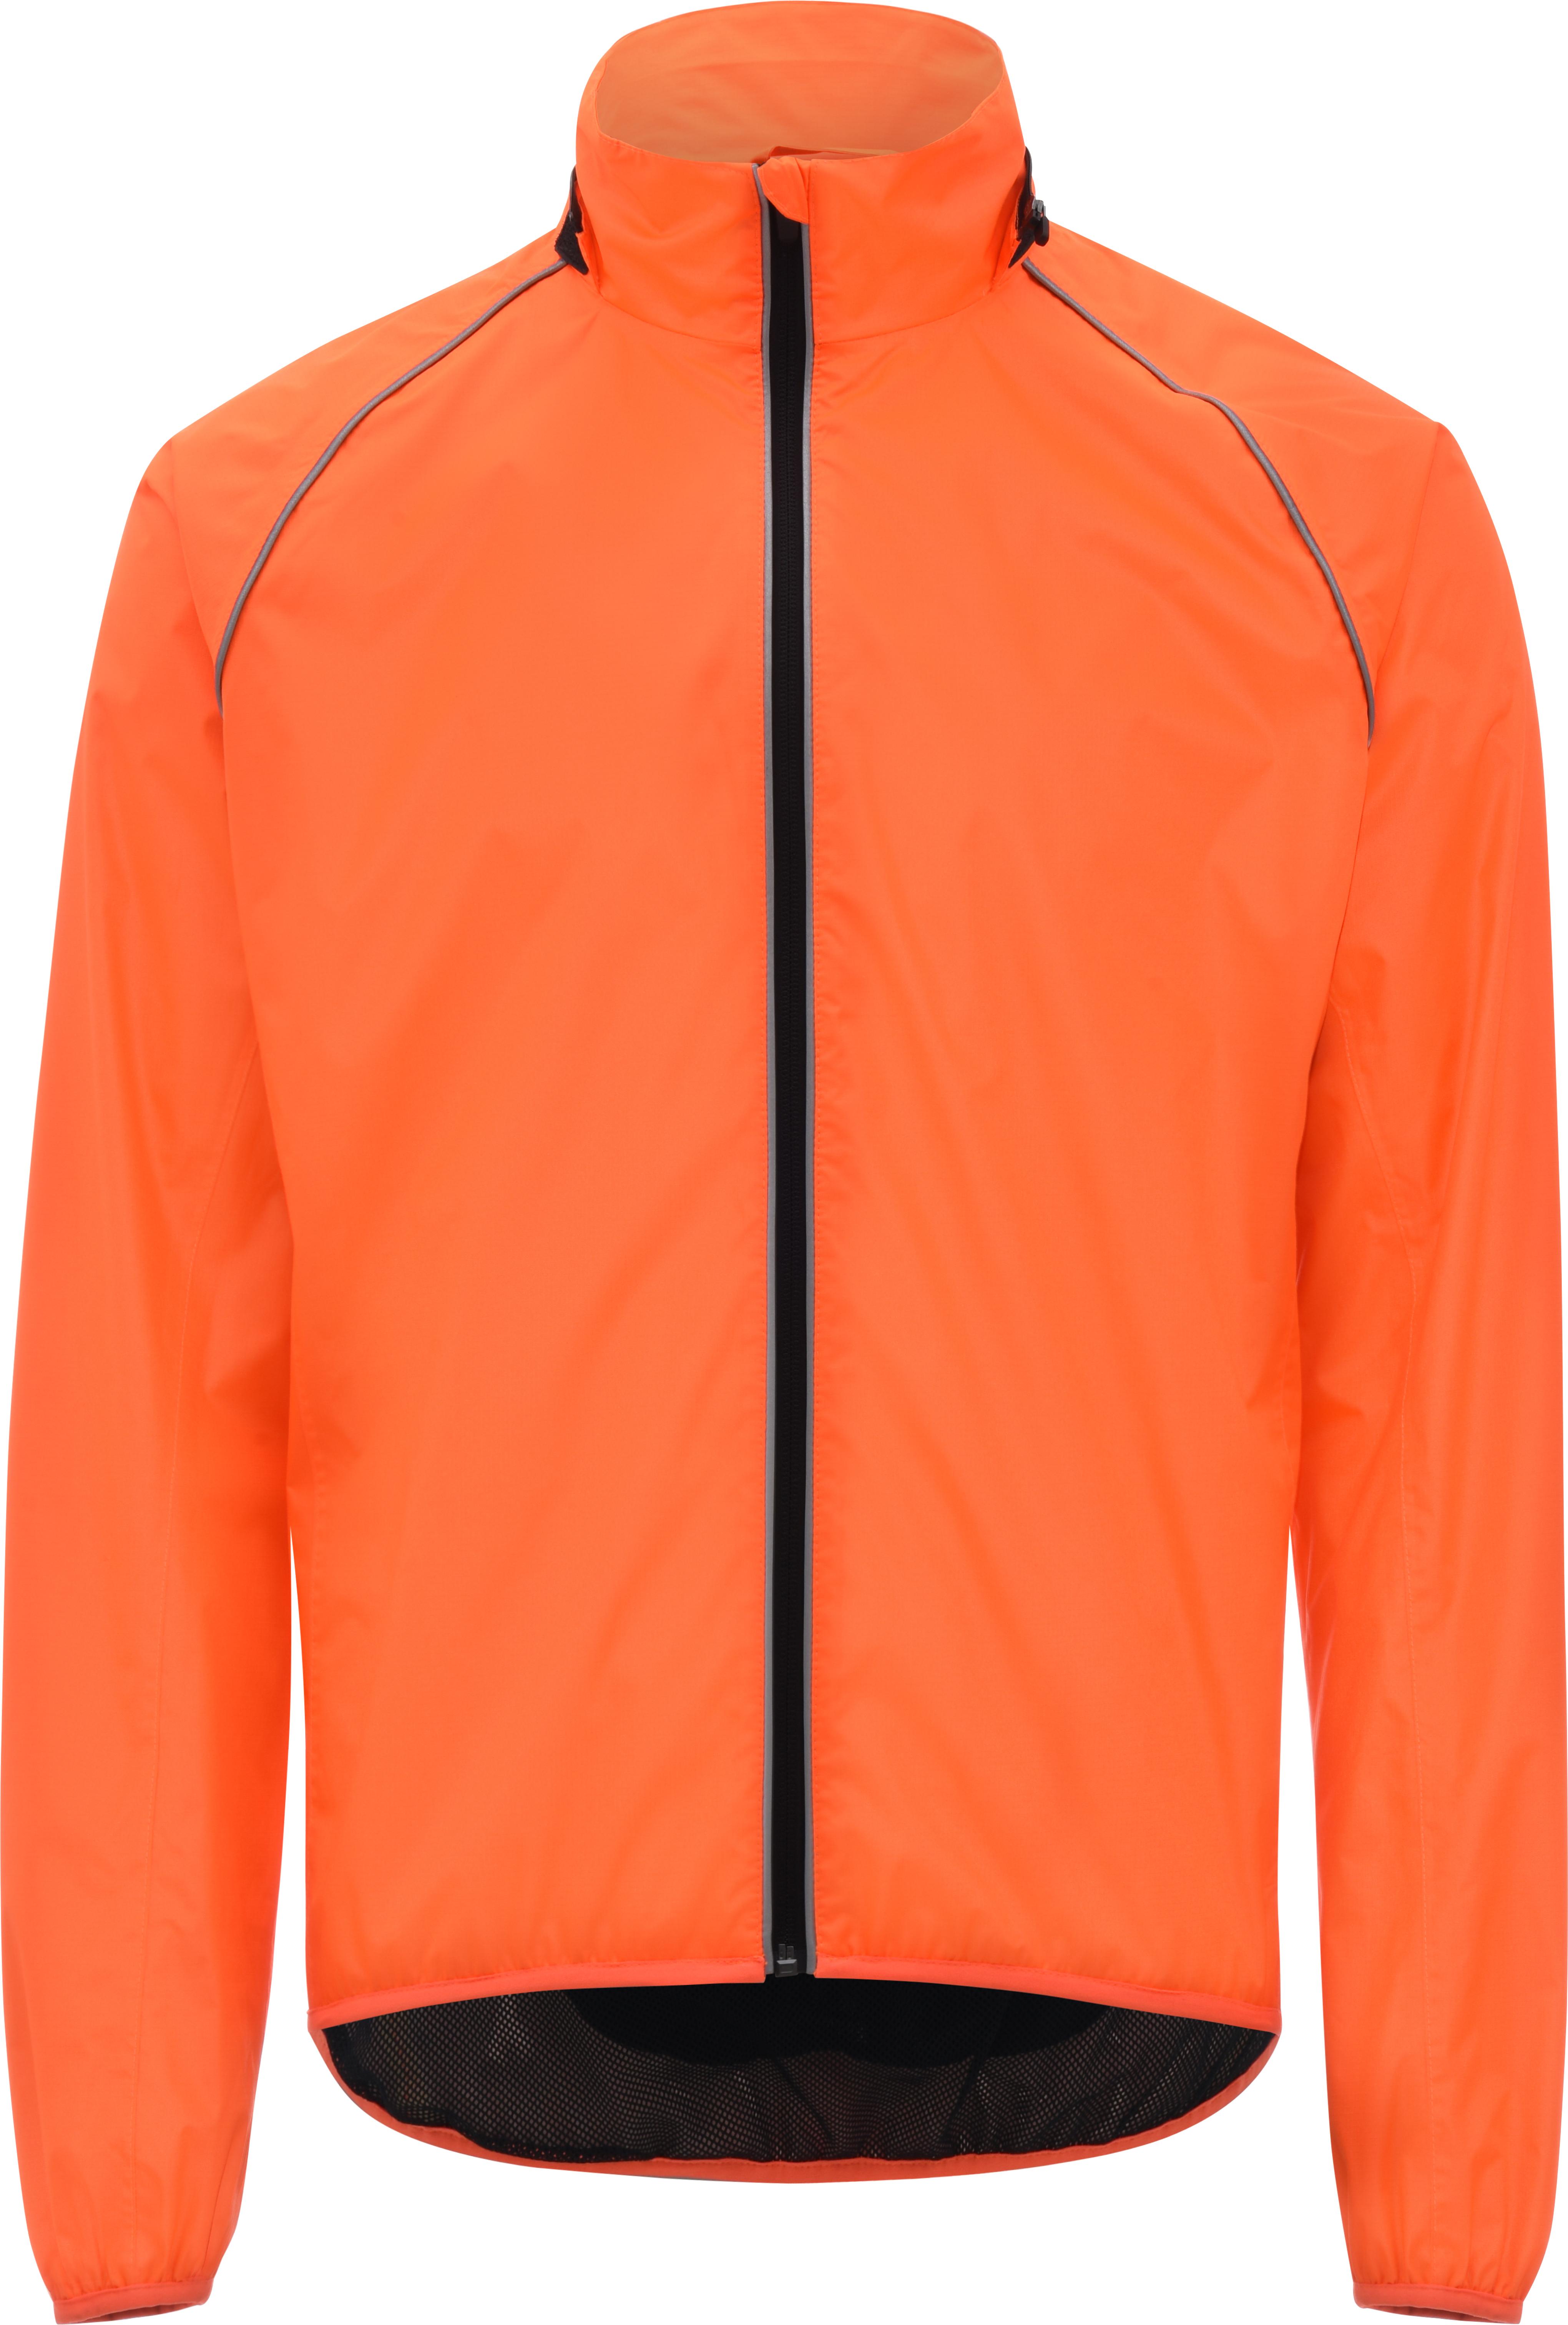 Halfords Ridge Unisex Waterproof Jacket - Fluorescent Orange, L